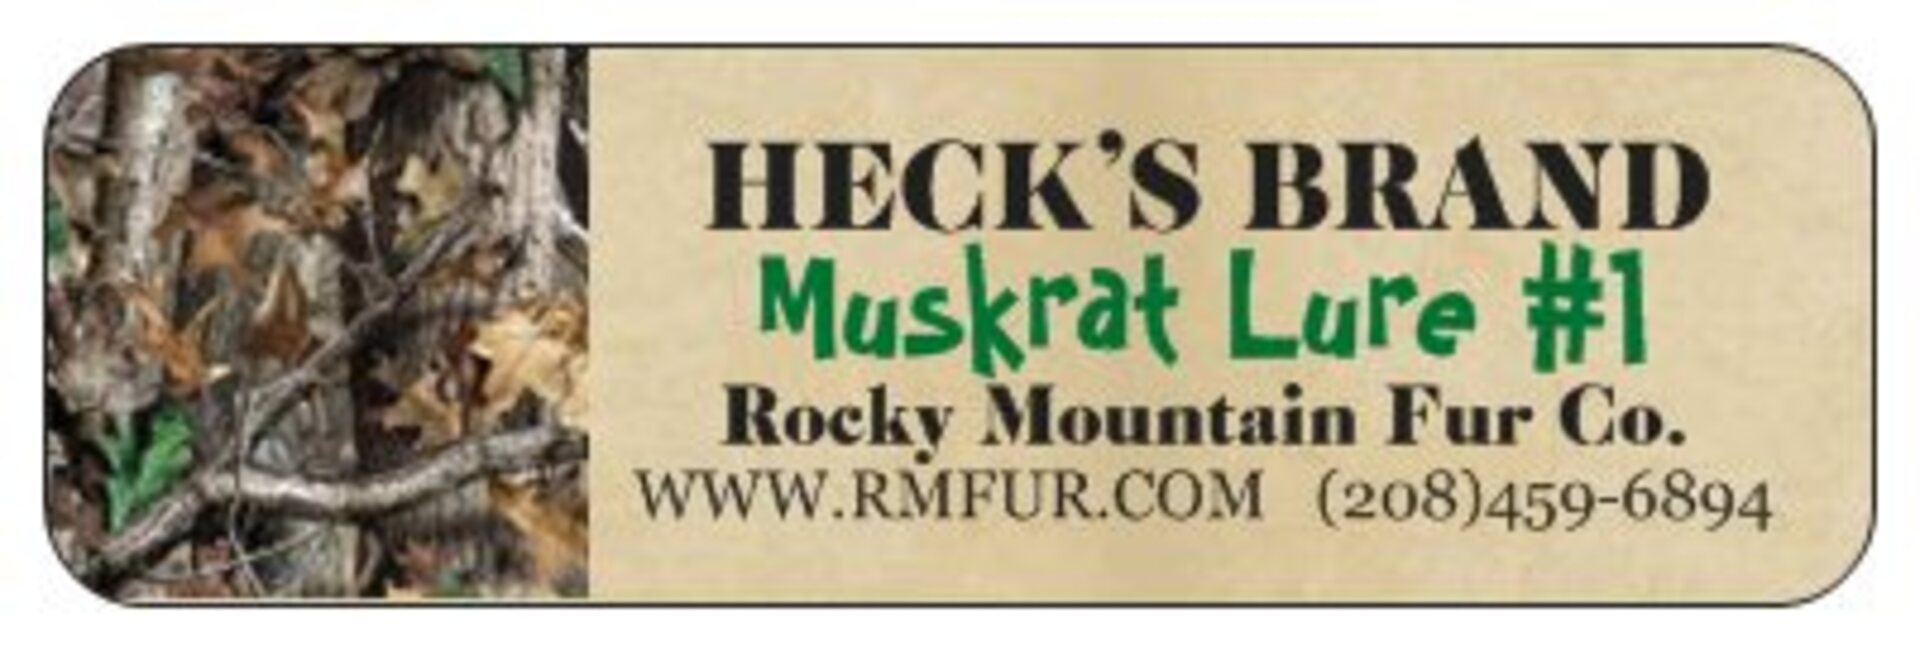 Heck's Muskrat Lure #1